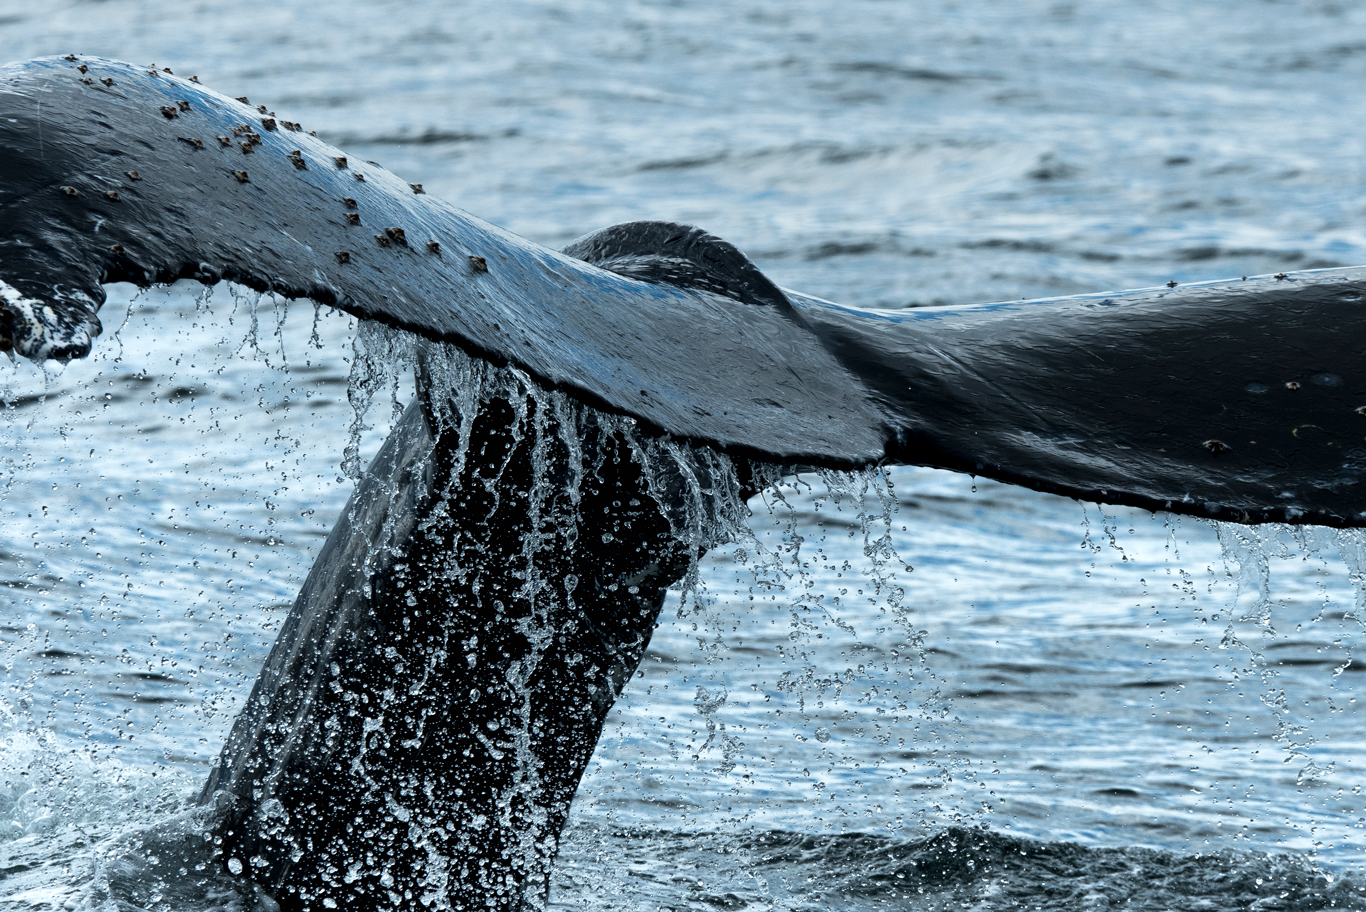 ザトウクジラの尾